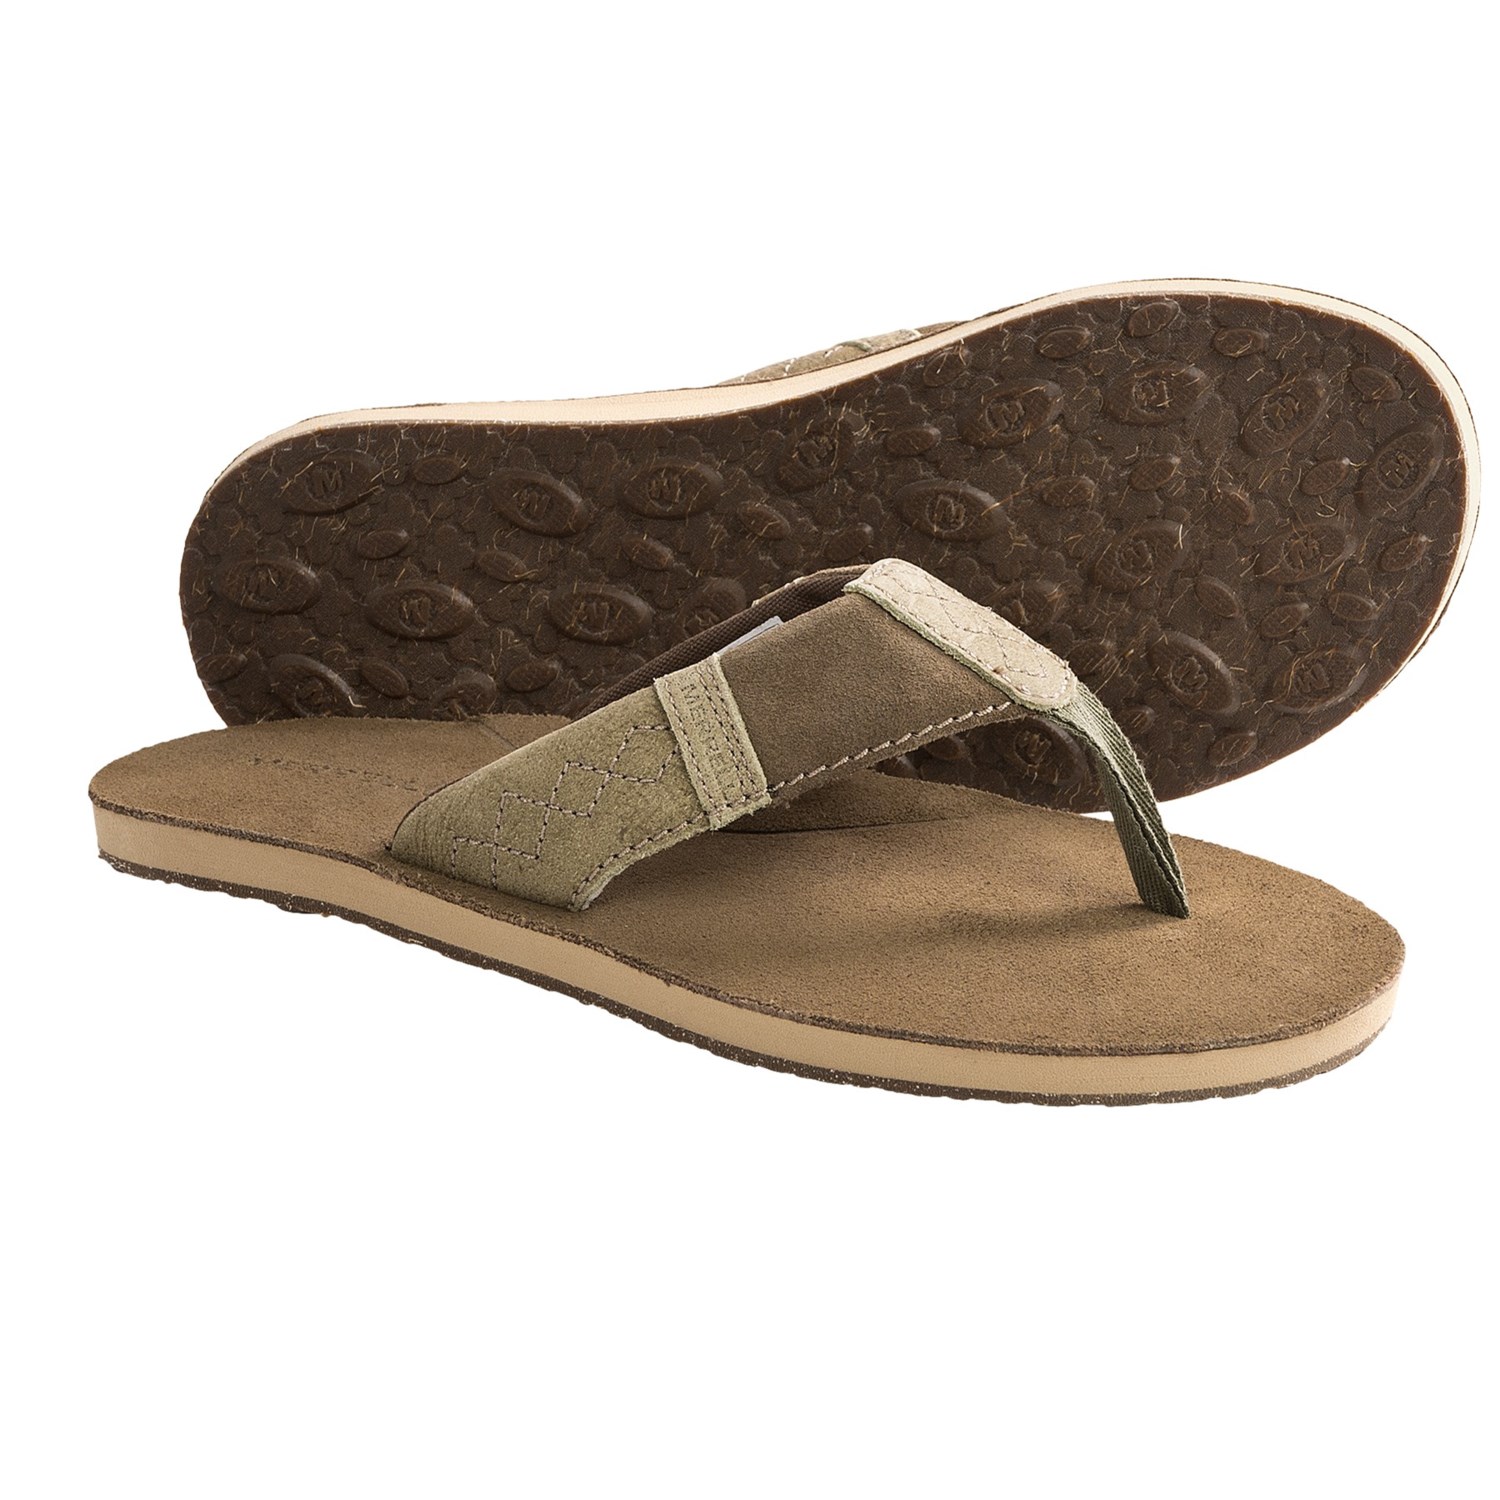 Merrell Karfa Thong Sandals - Leather, Flip-Flops (For Men) - Save 59%